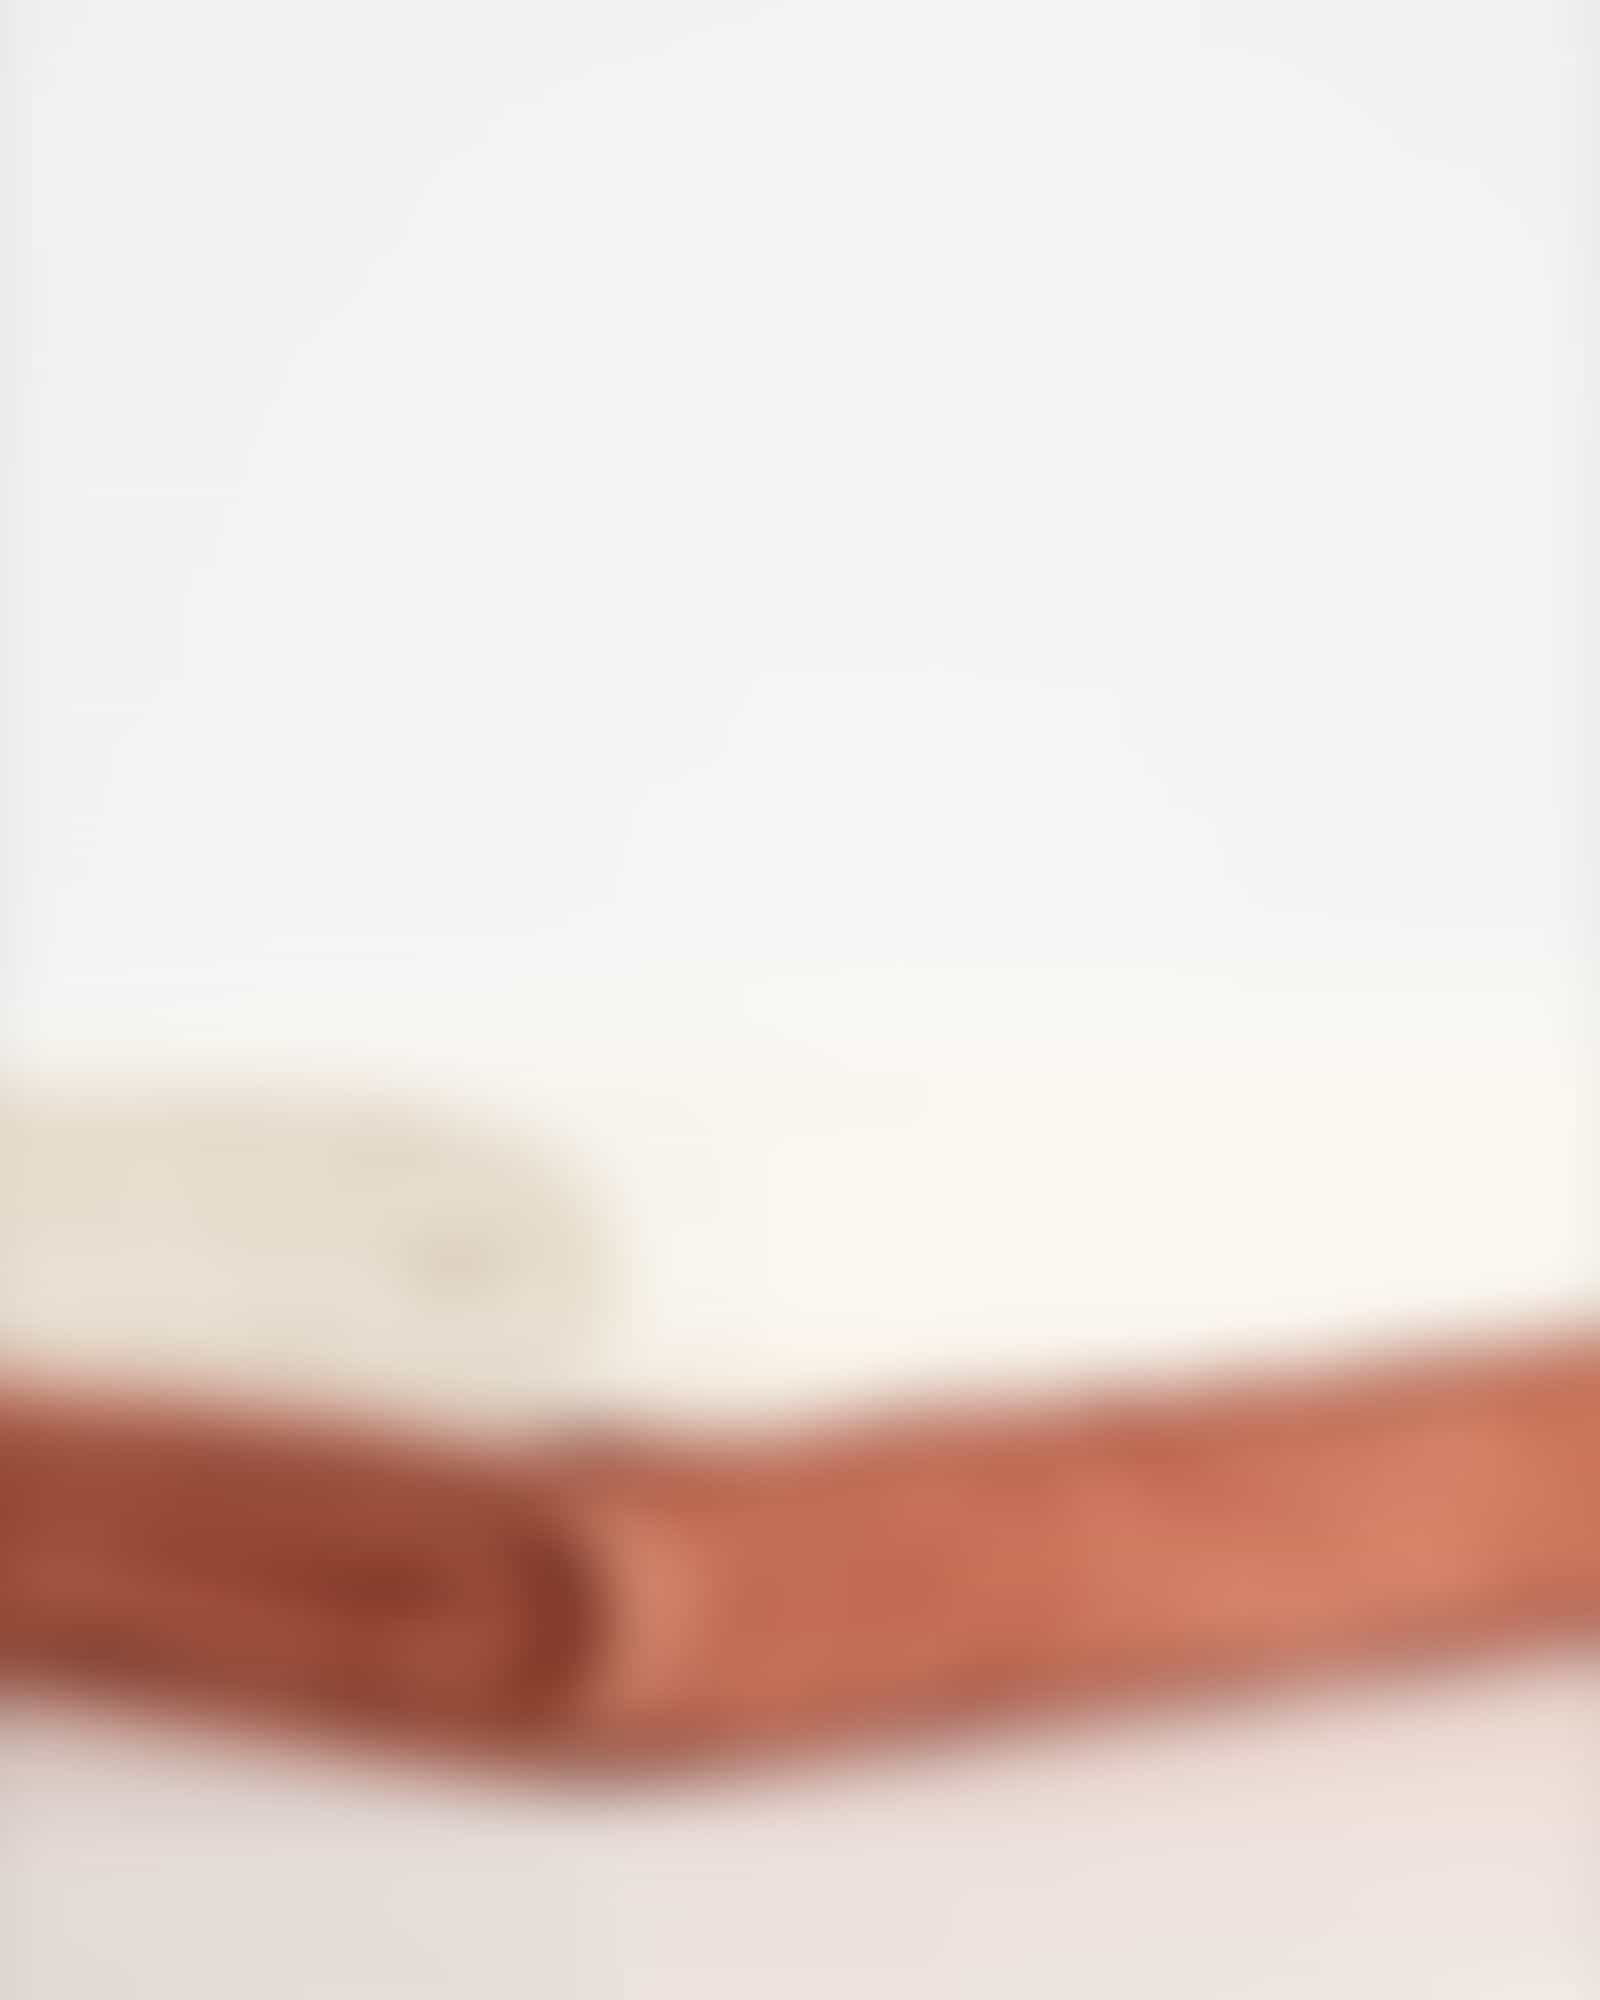 JOOP Uni Cornflower 1670 - Farbe: Creme - 356 - Saunatuch 80x200 cm